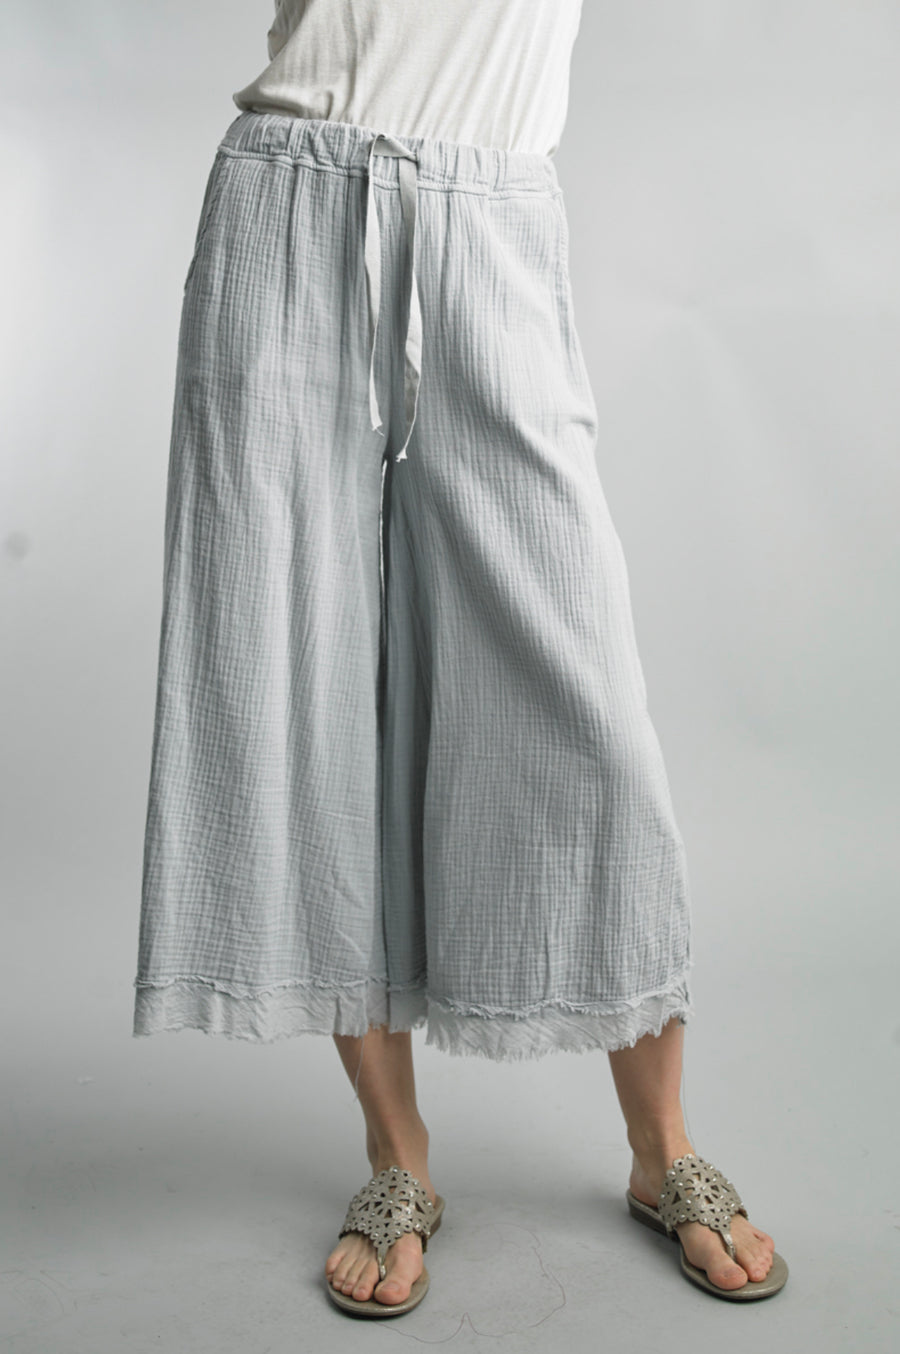 Mango Women's Cotton Culottes Pants | CoolSprings Galleria